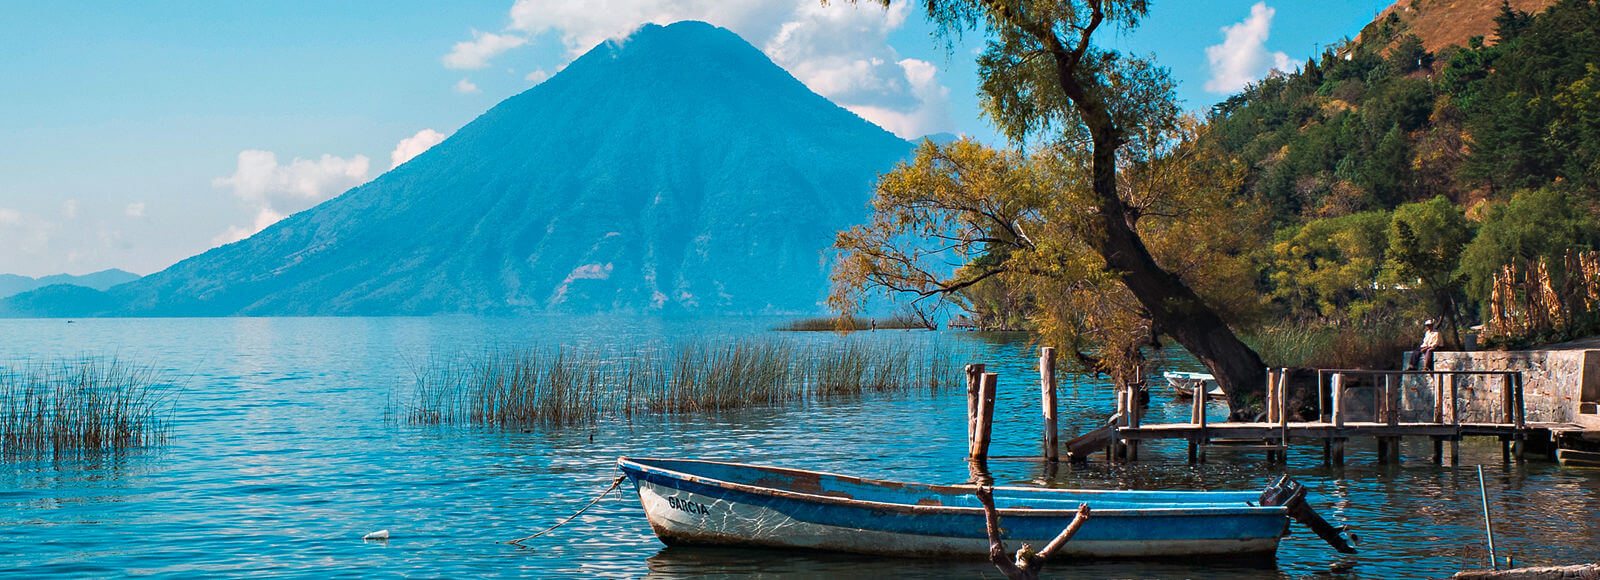 Lac Atitlan au Guatemala